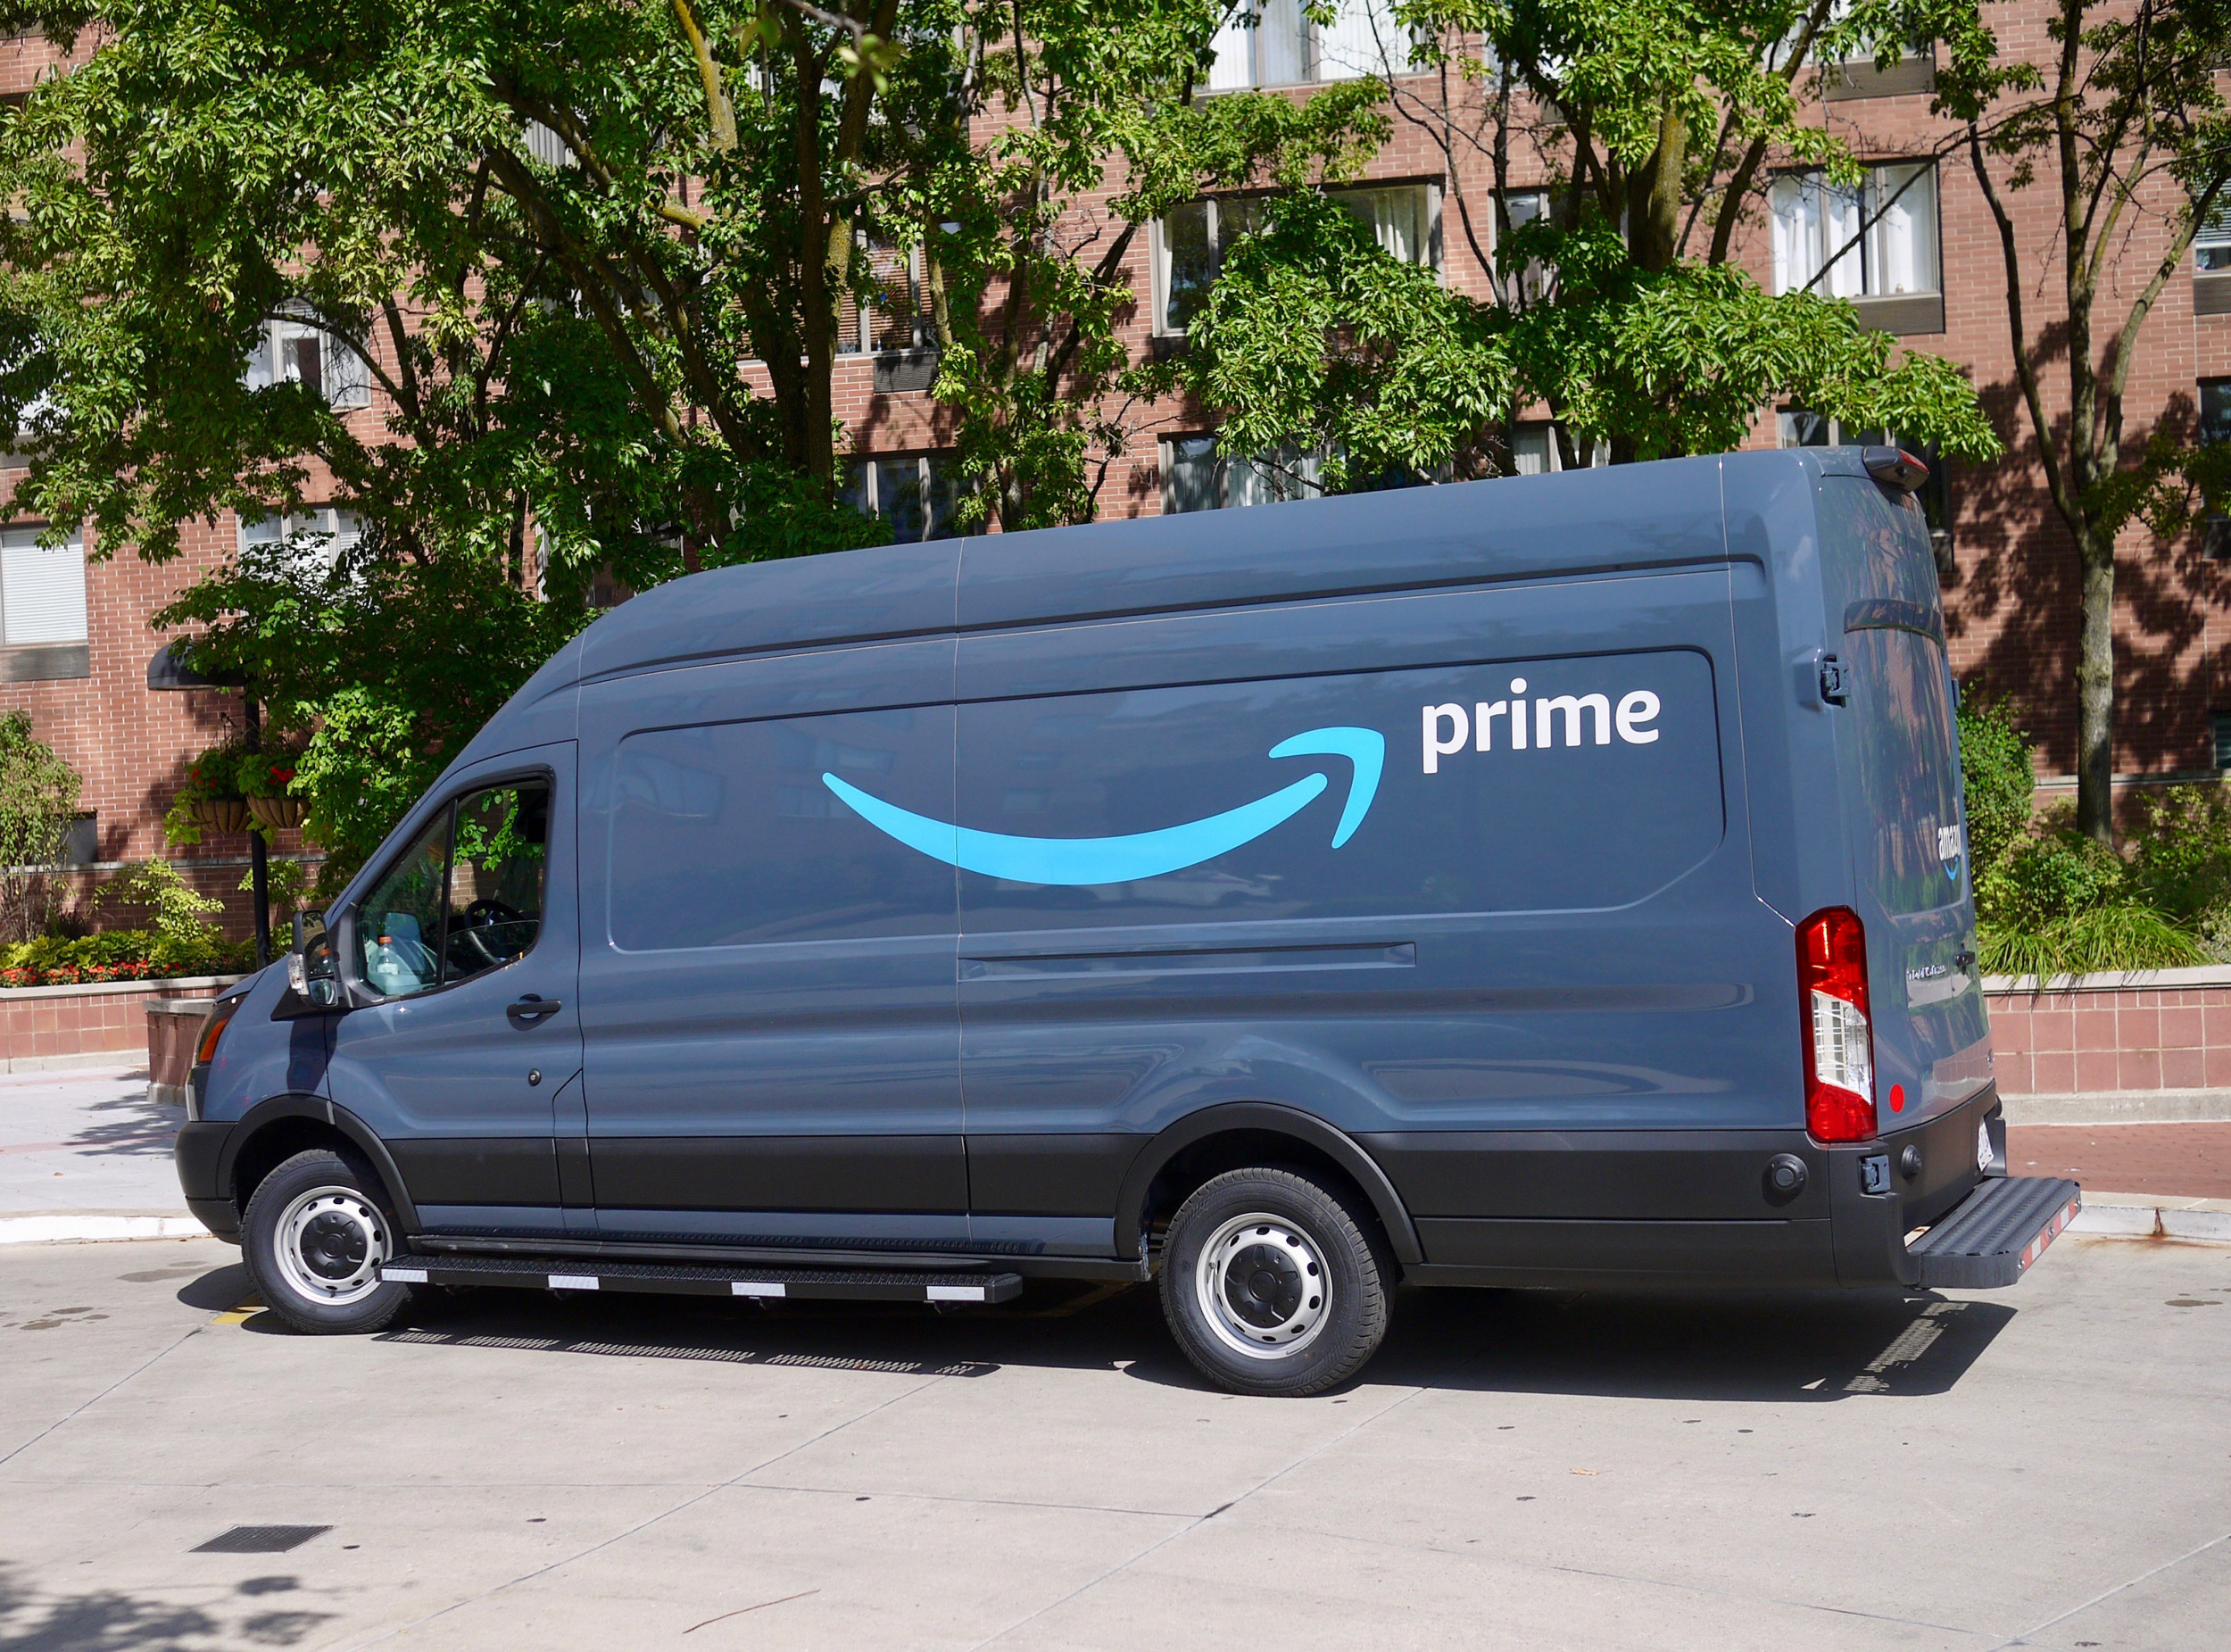 Amazon Driver Says Van Was Stolen While 